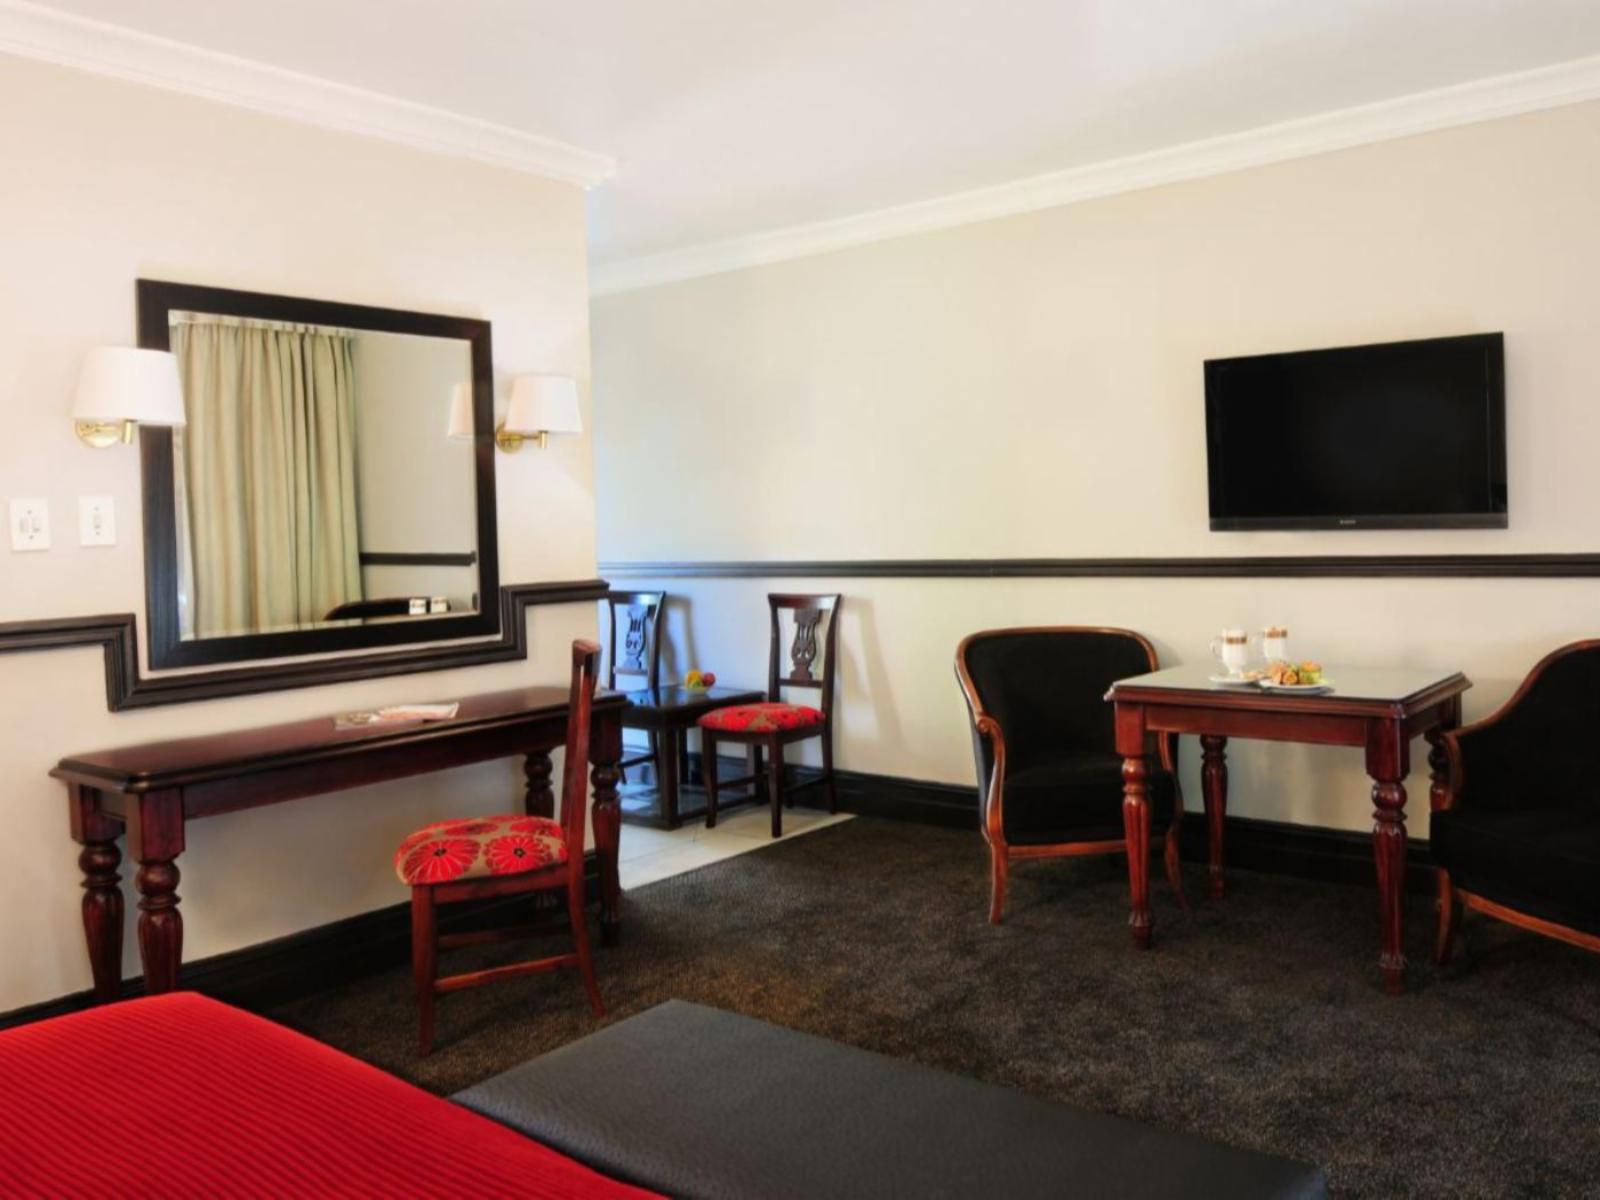 Court Classique Suite Hotel Arcadia Pretoria Tshwane Gauteng South Africa Living Room